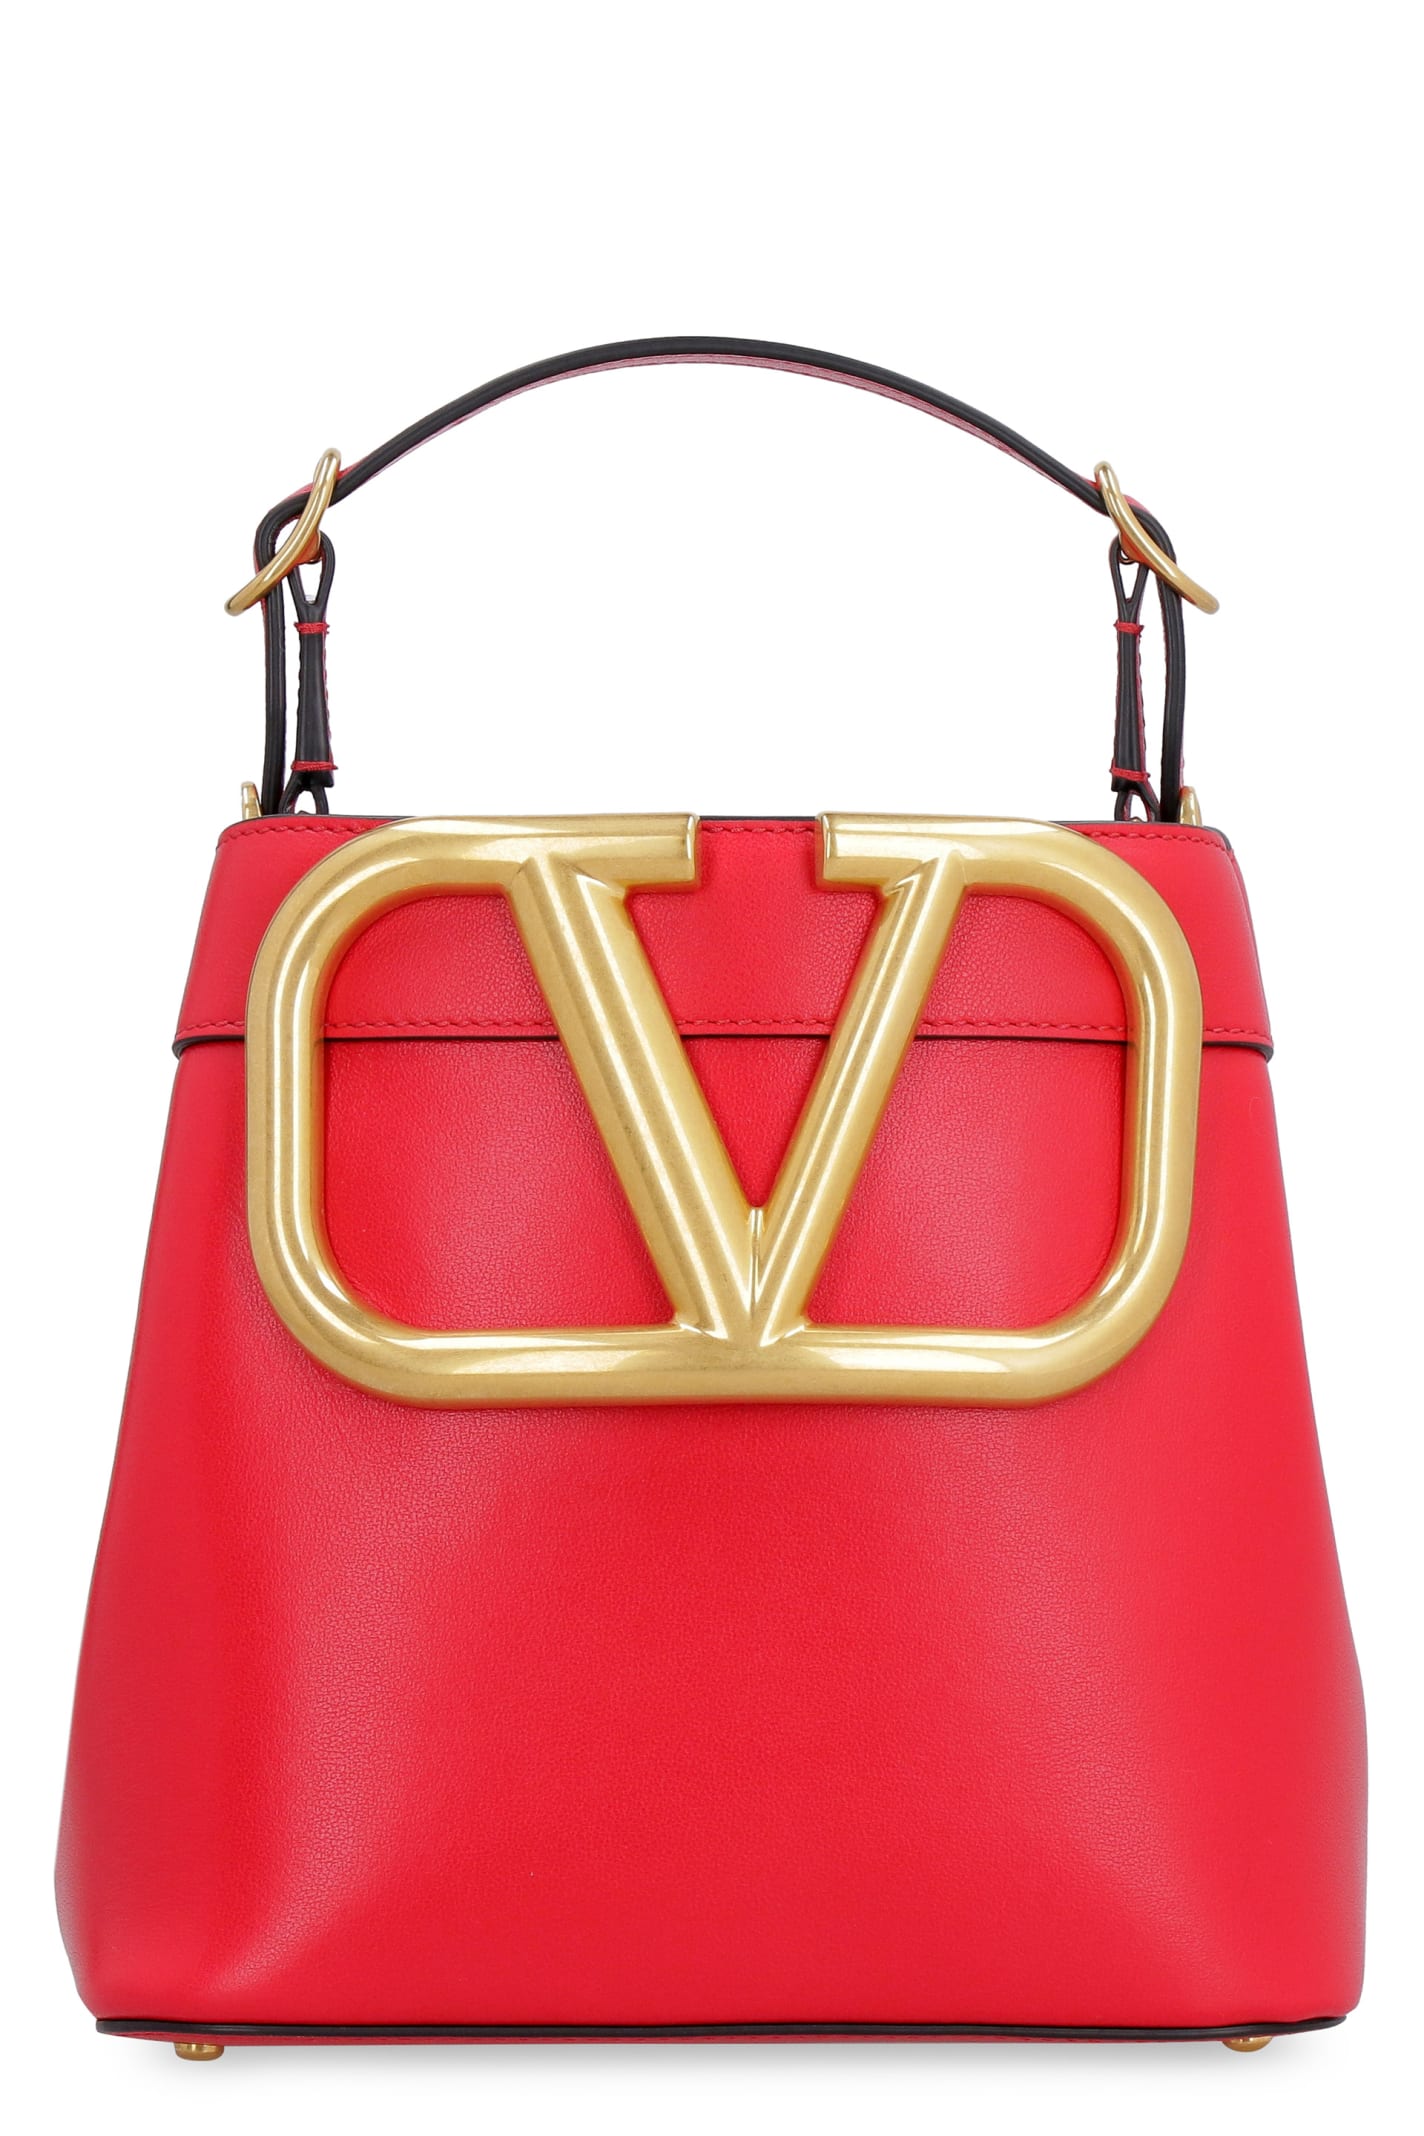 Valentino Garavani - Supervee Leather Handbag